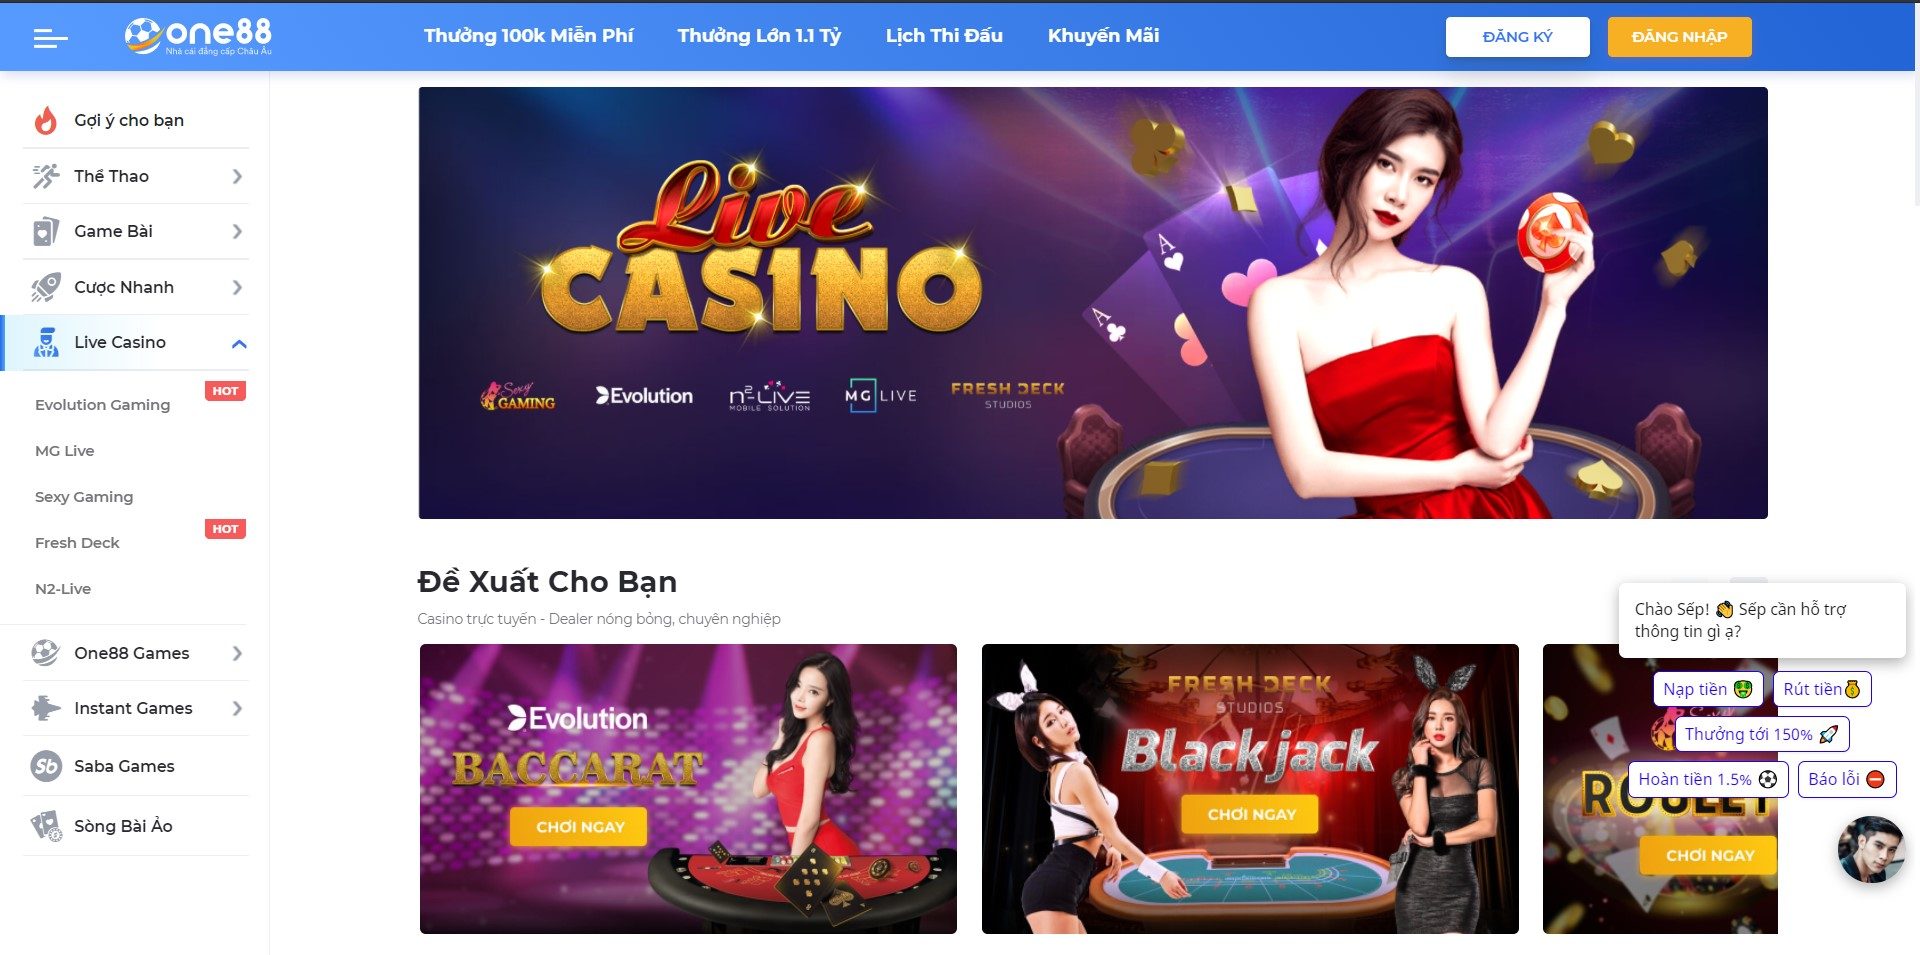 Kho game casino “chất” tại One88